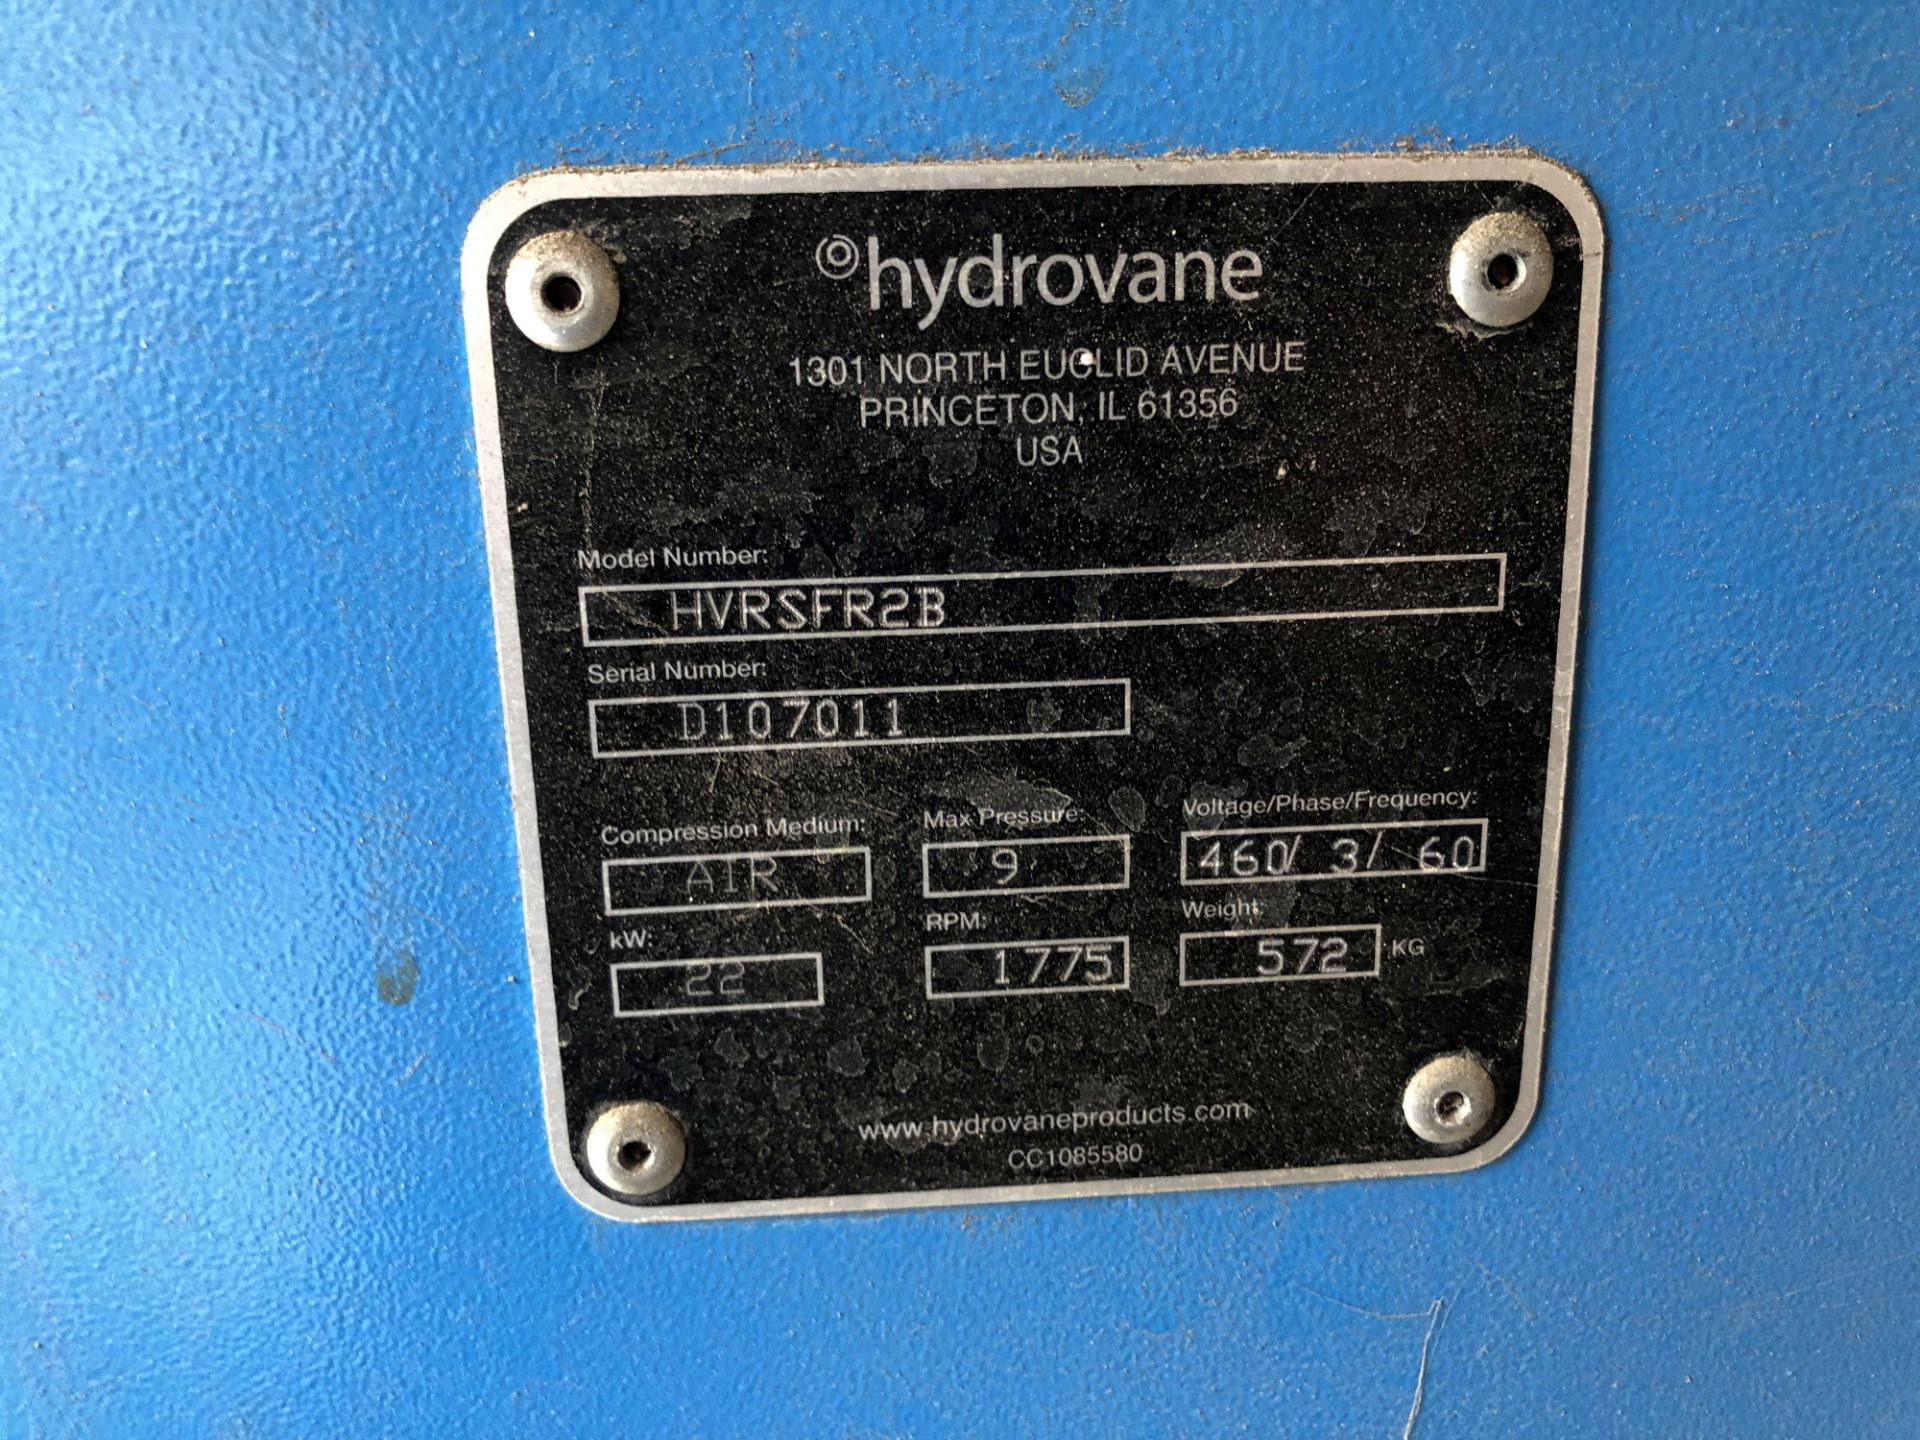 Hydrovane HV22RS 30 HP Air Compressor, Model HVRSFR2B, 460 V, 3 Ph, 60 Frequency, S/N D107011 - Image 3 of 3